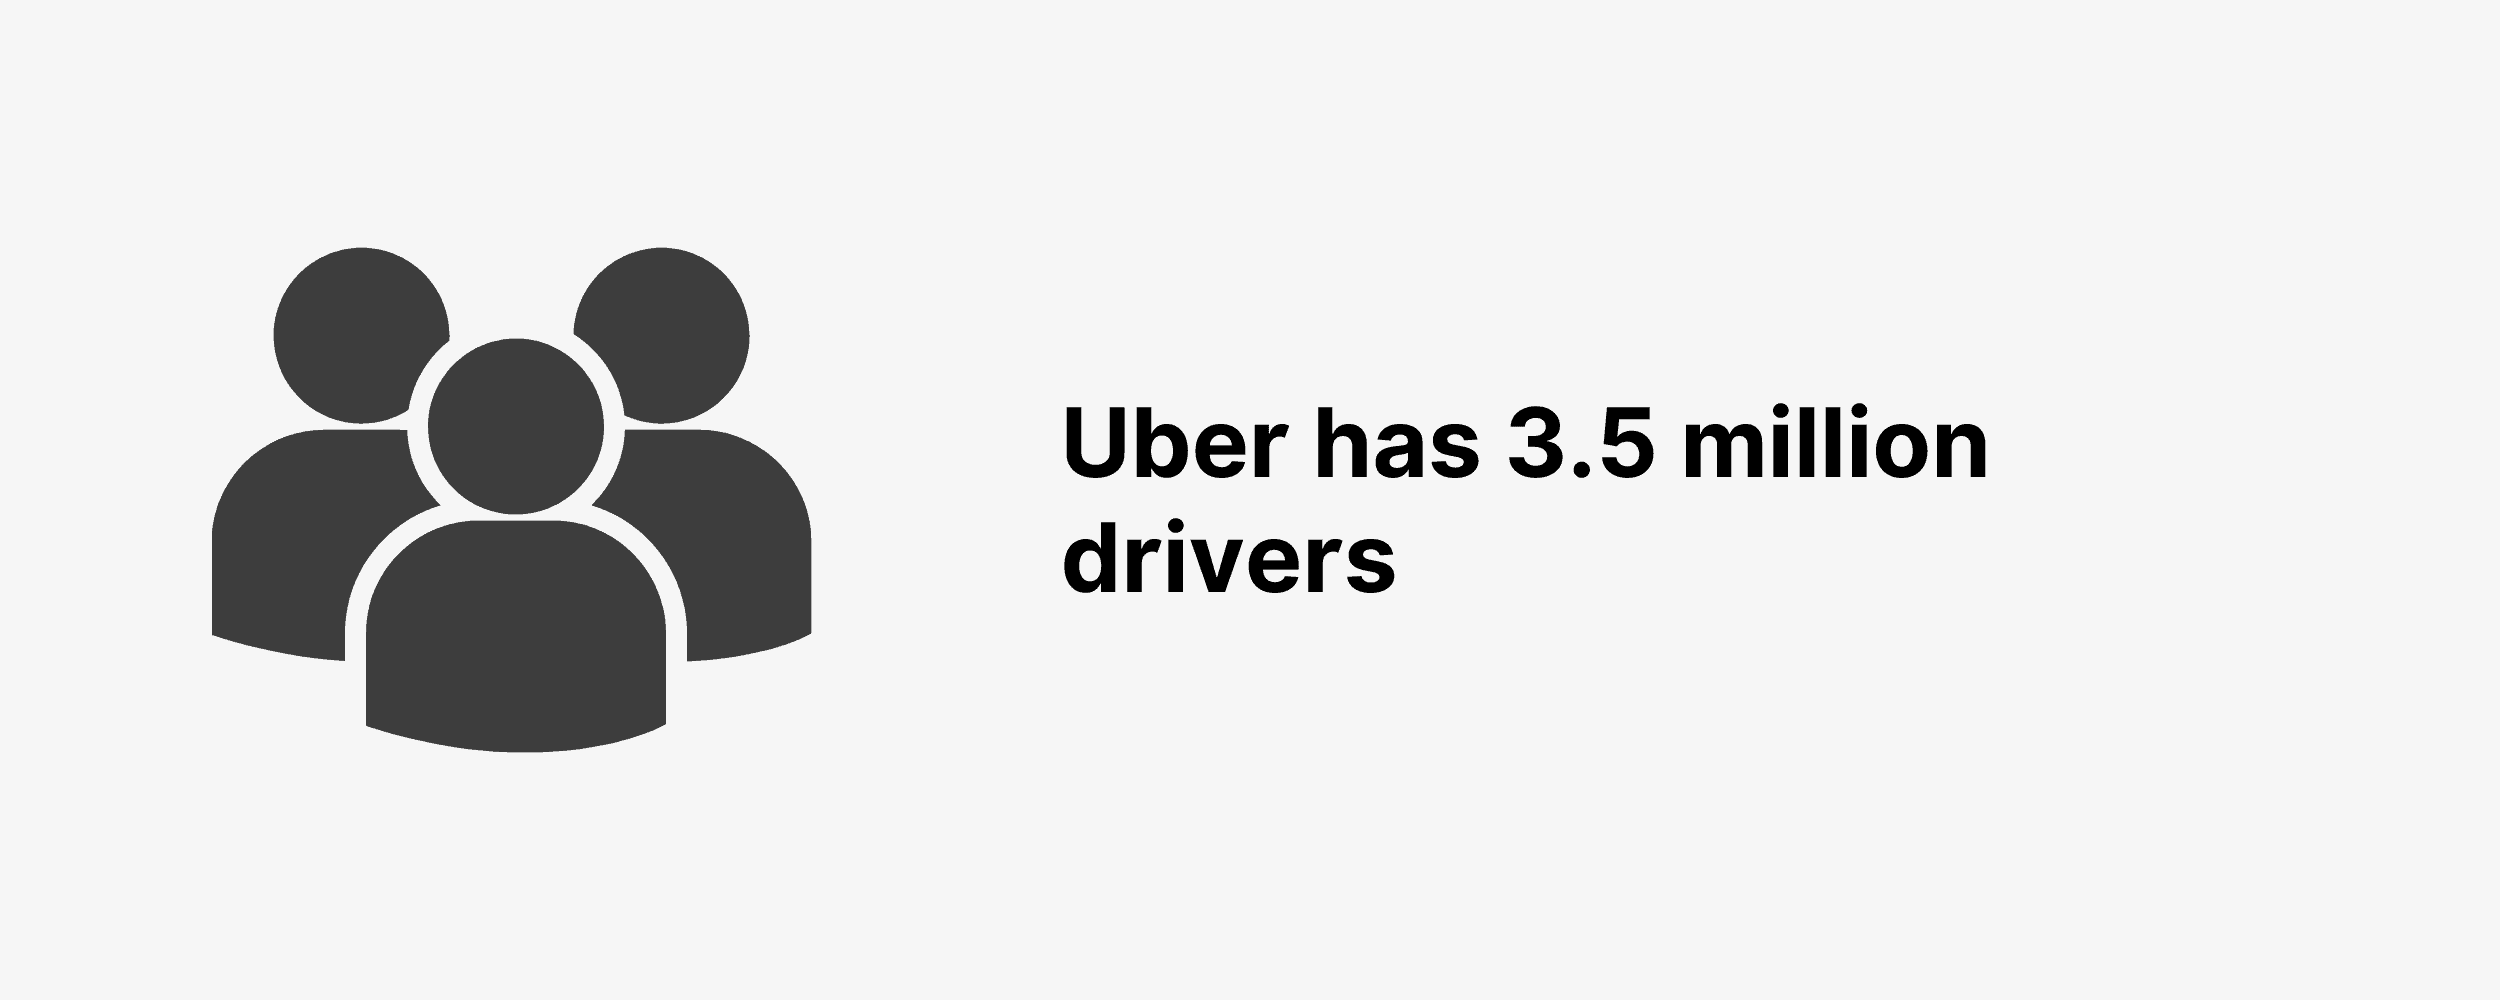 Uber has 3.5 million drivers